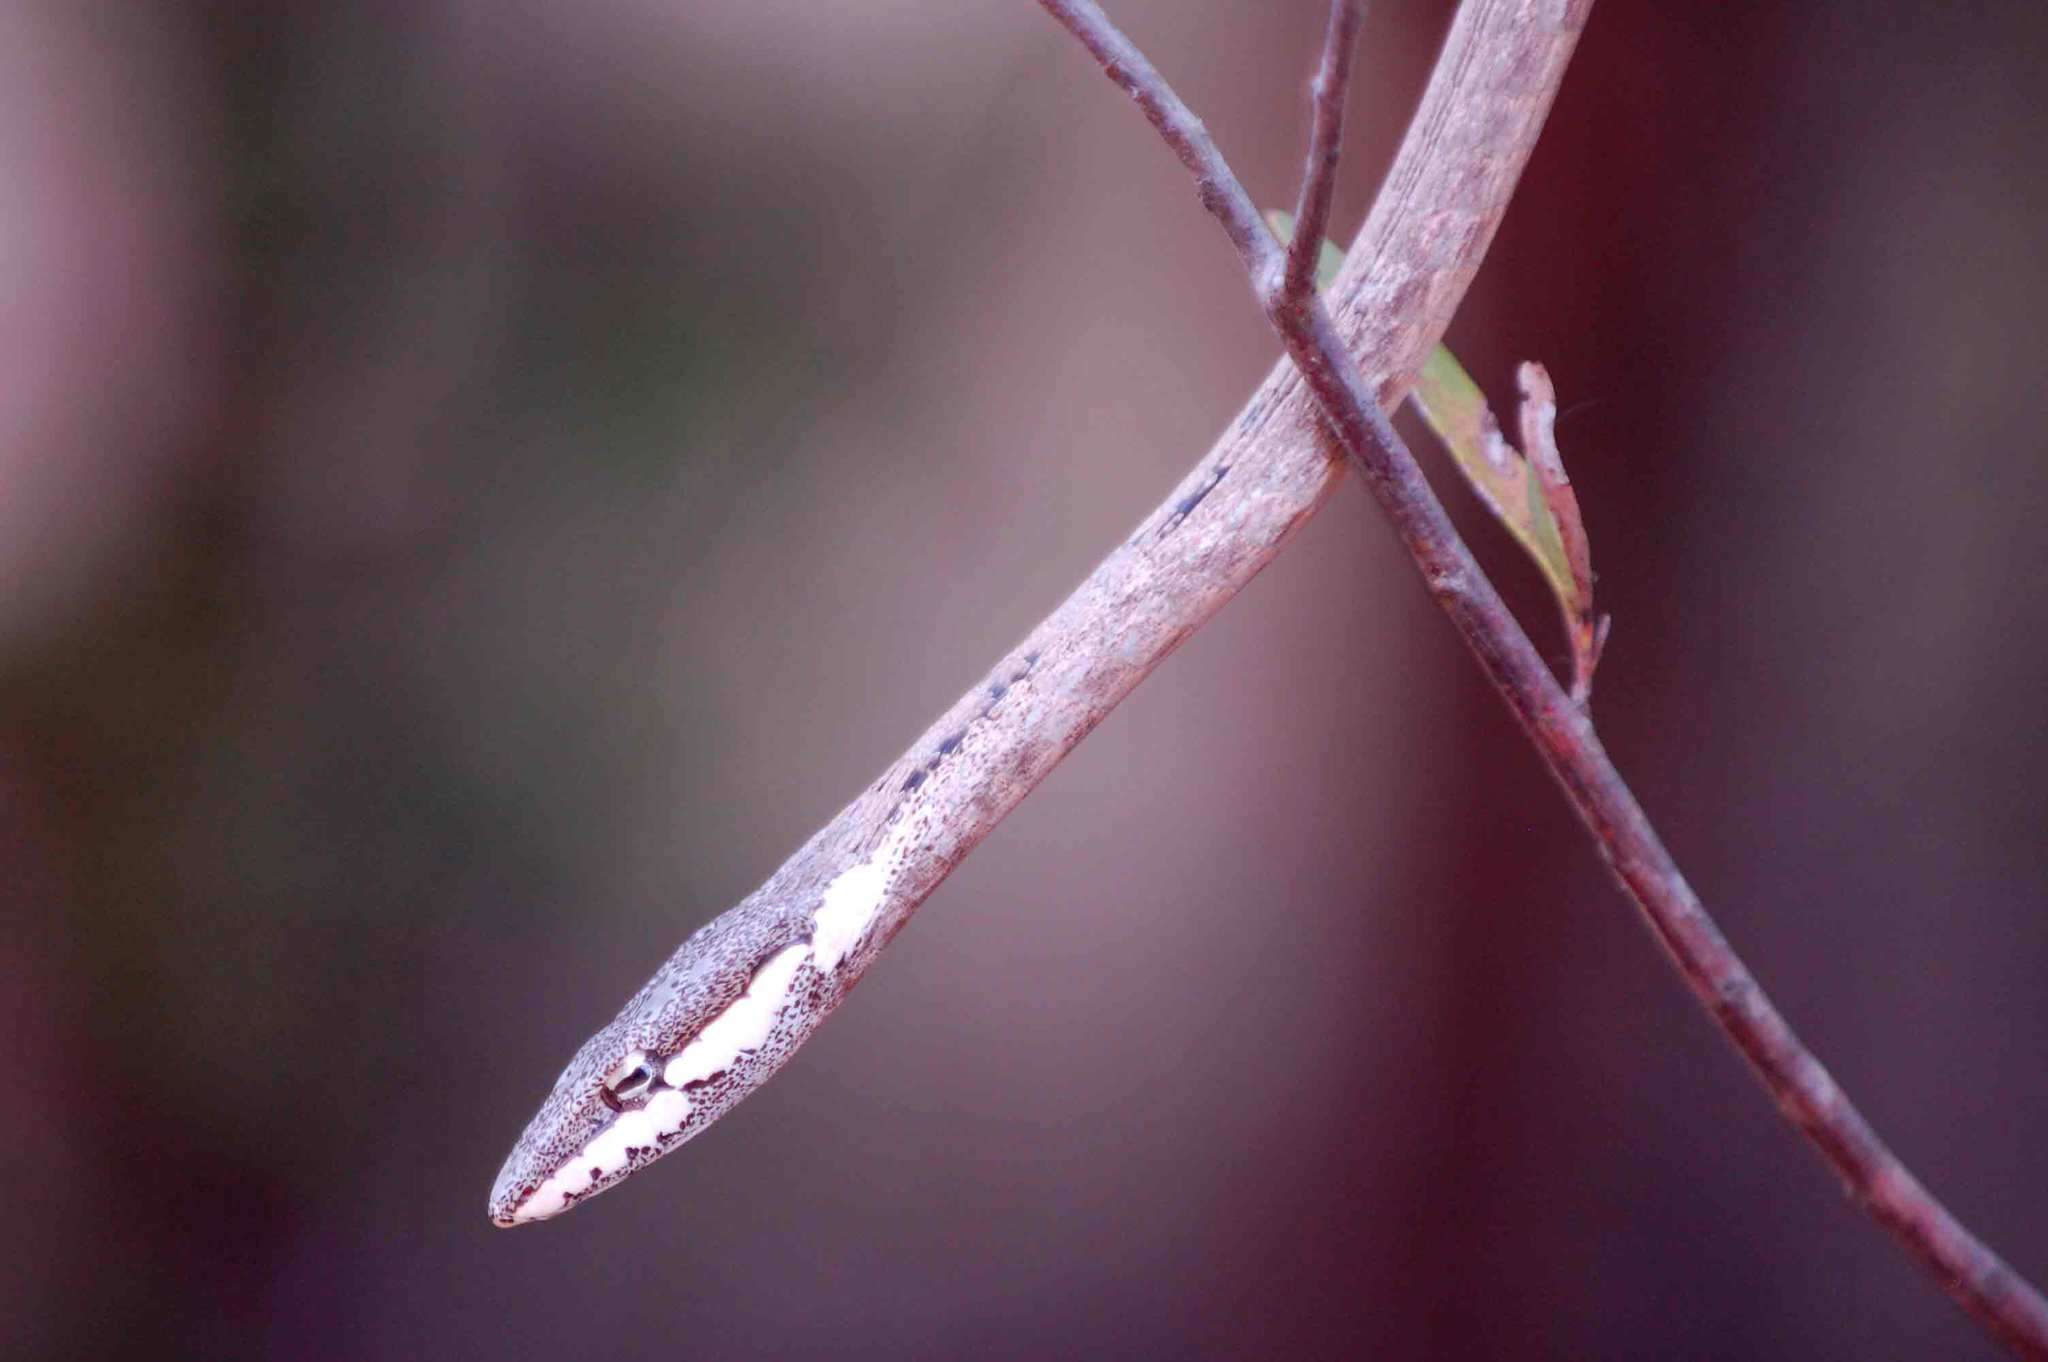 Image of Twig snake